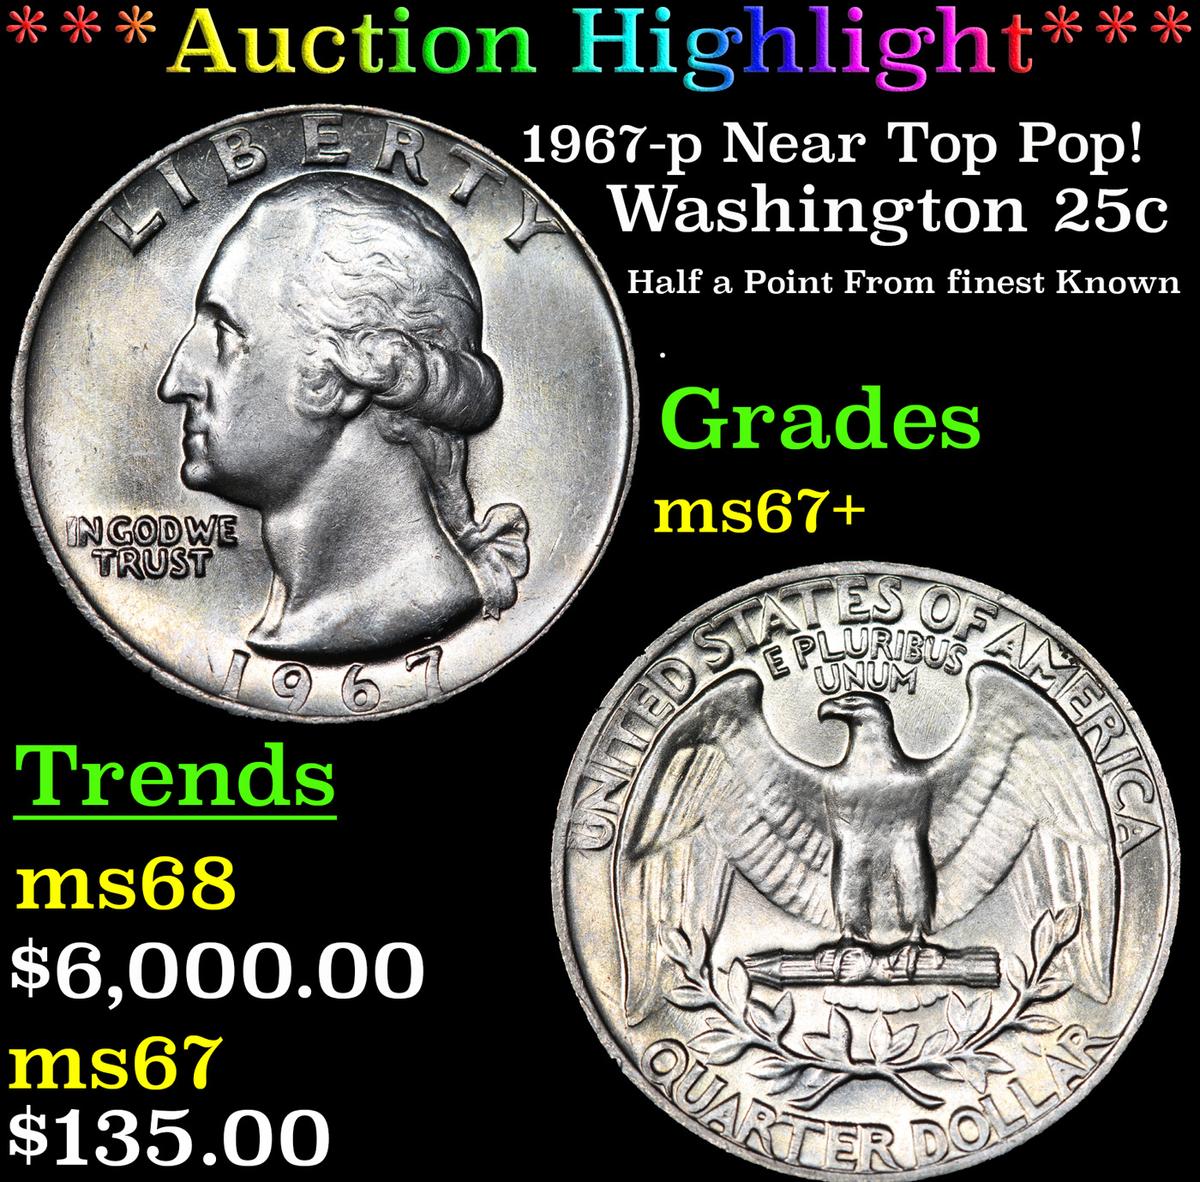 ***Auction Highlight*** 1967-p Washington Quarter Near Top Pop! 25c Graded ms67+ By SEGS (fc)